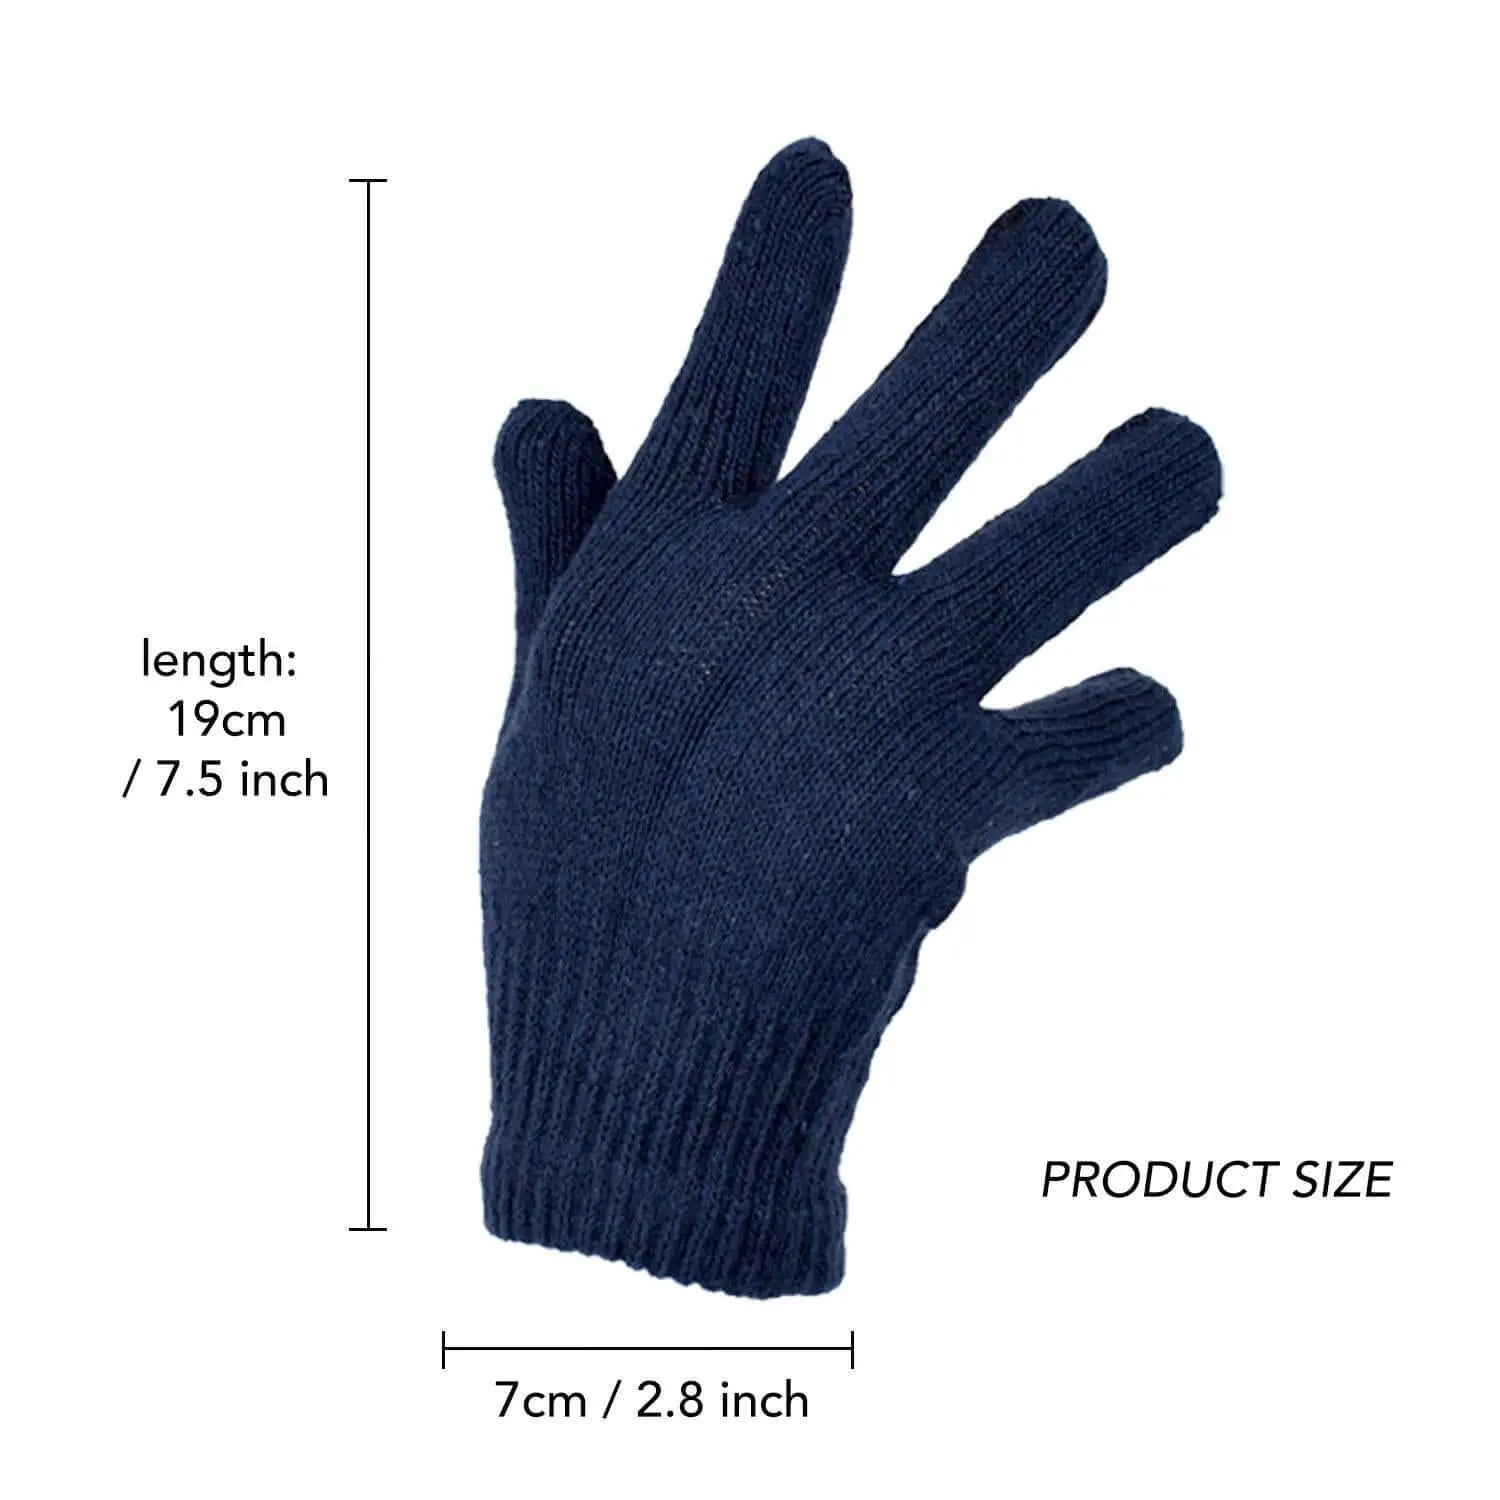 4-Pair Pack Navy Blue Knit Gloves - Cotton Blend